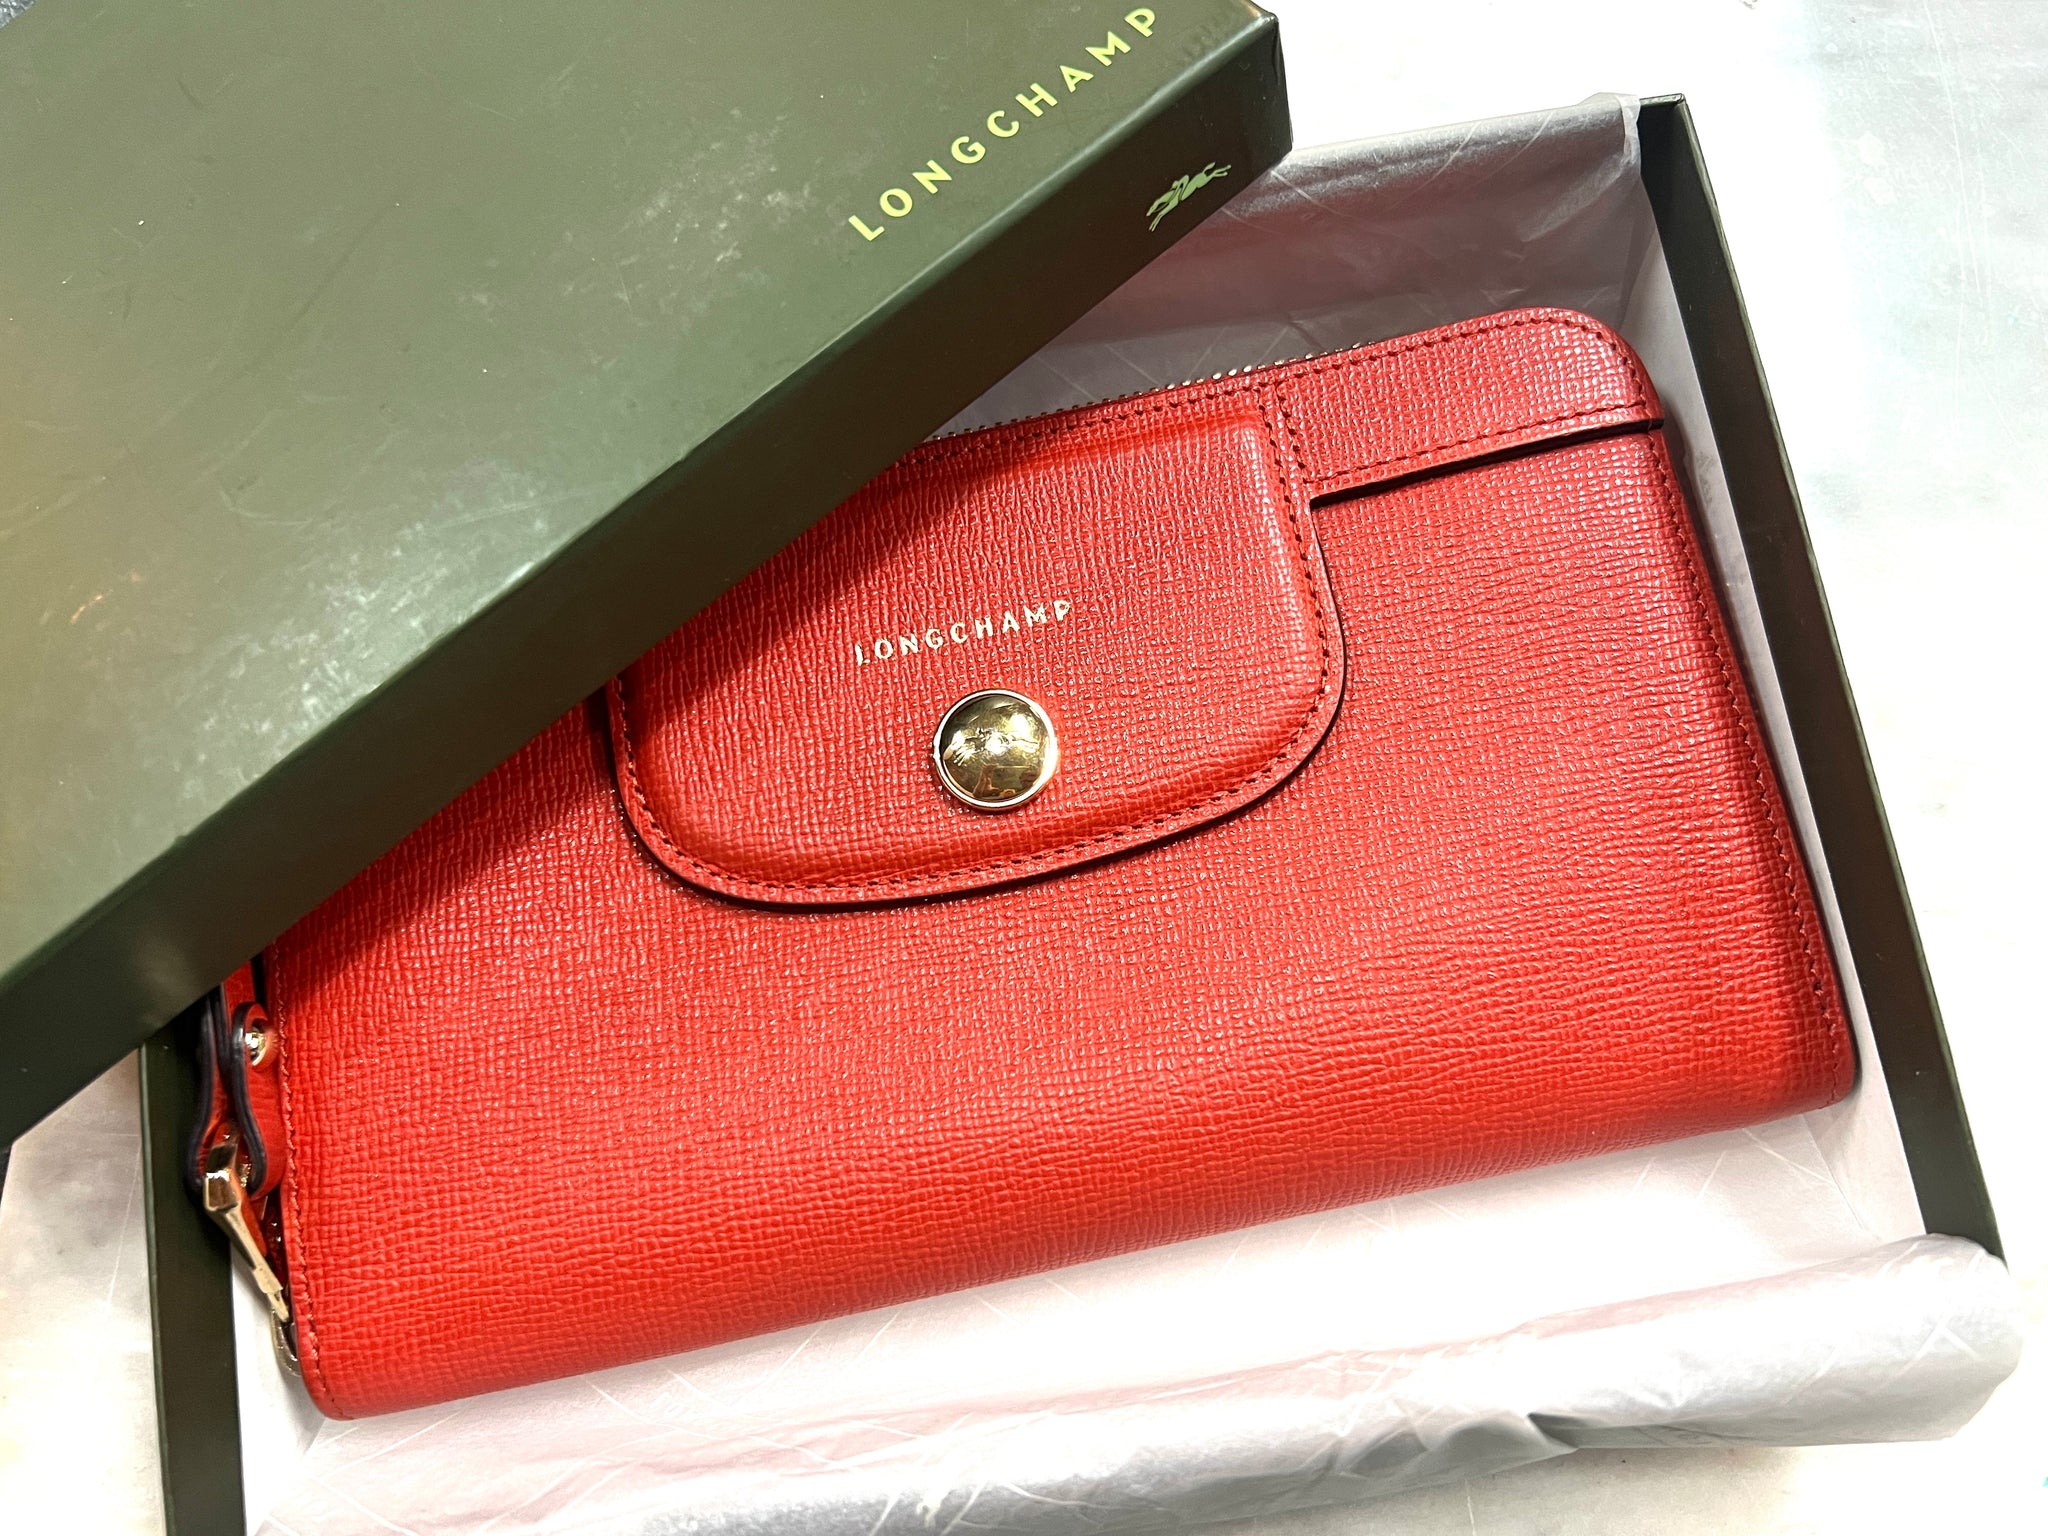 Longchamp Handbags, Purses & Wallets for Women